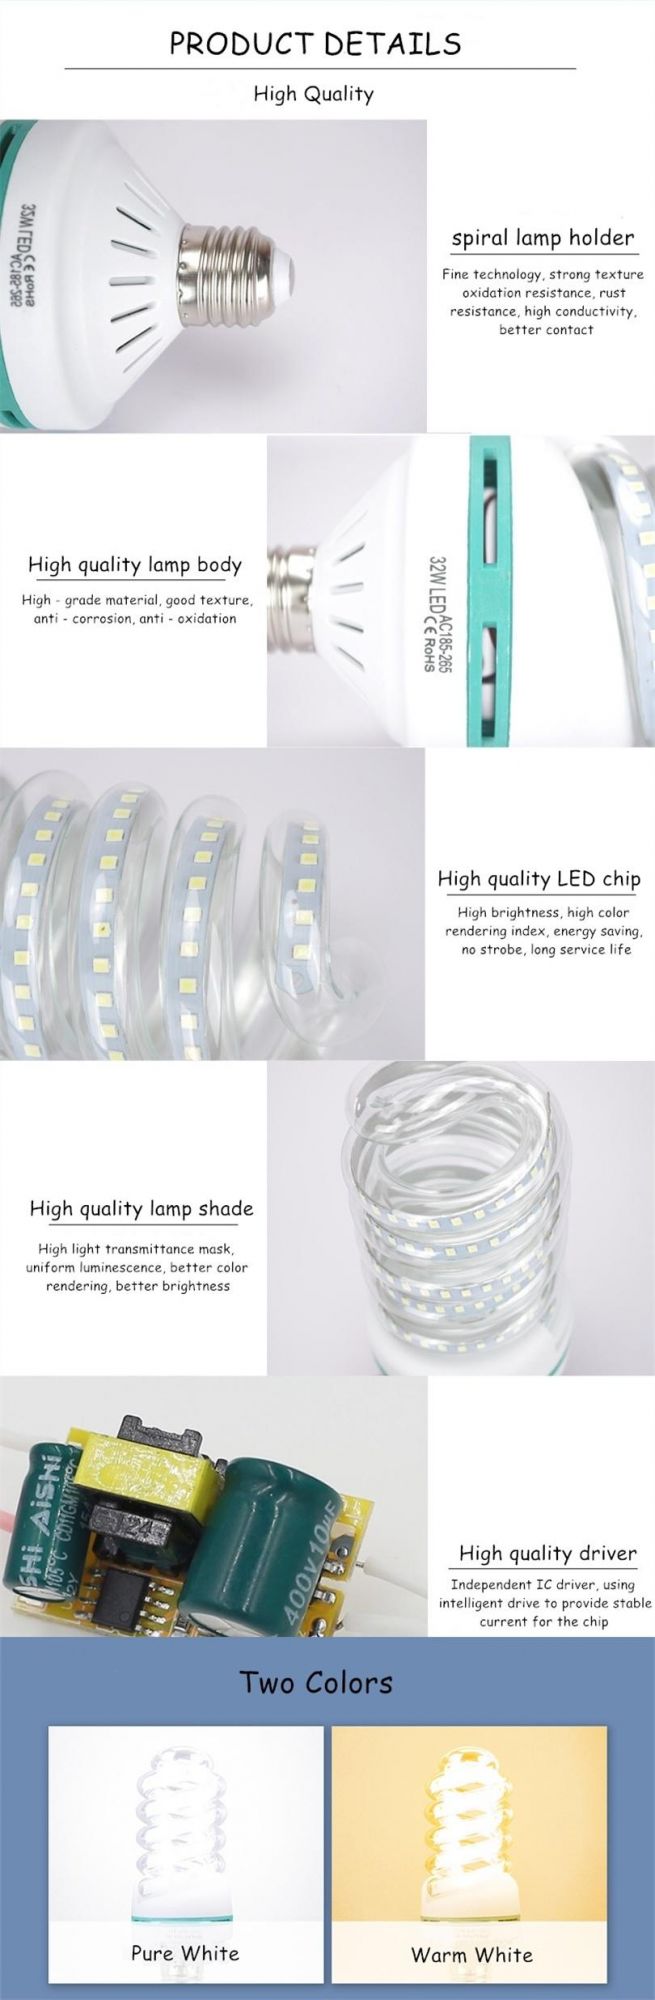 E27 16W Spiral Glass LED Energy Saving Lamp